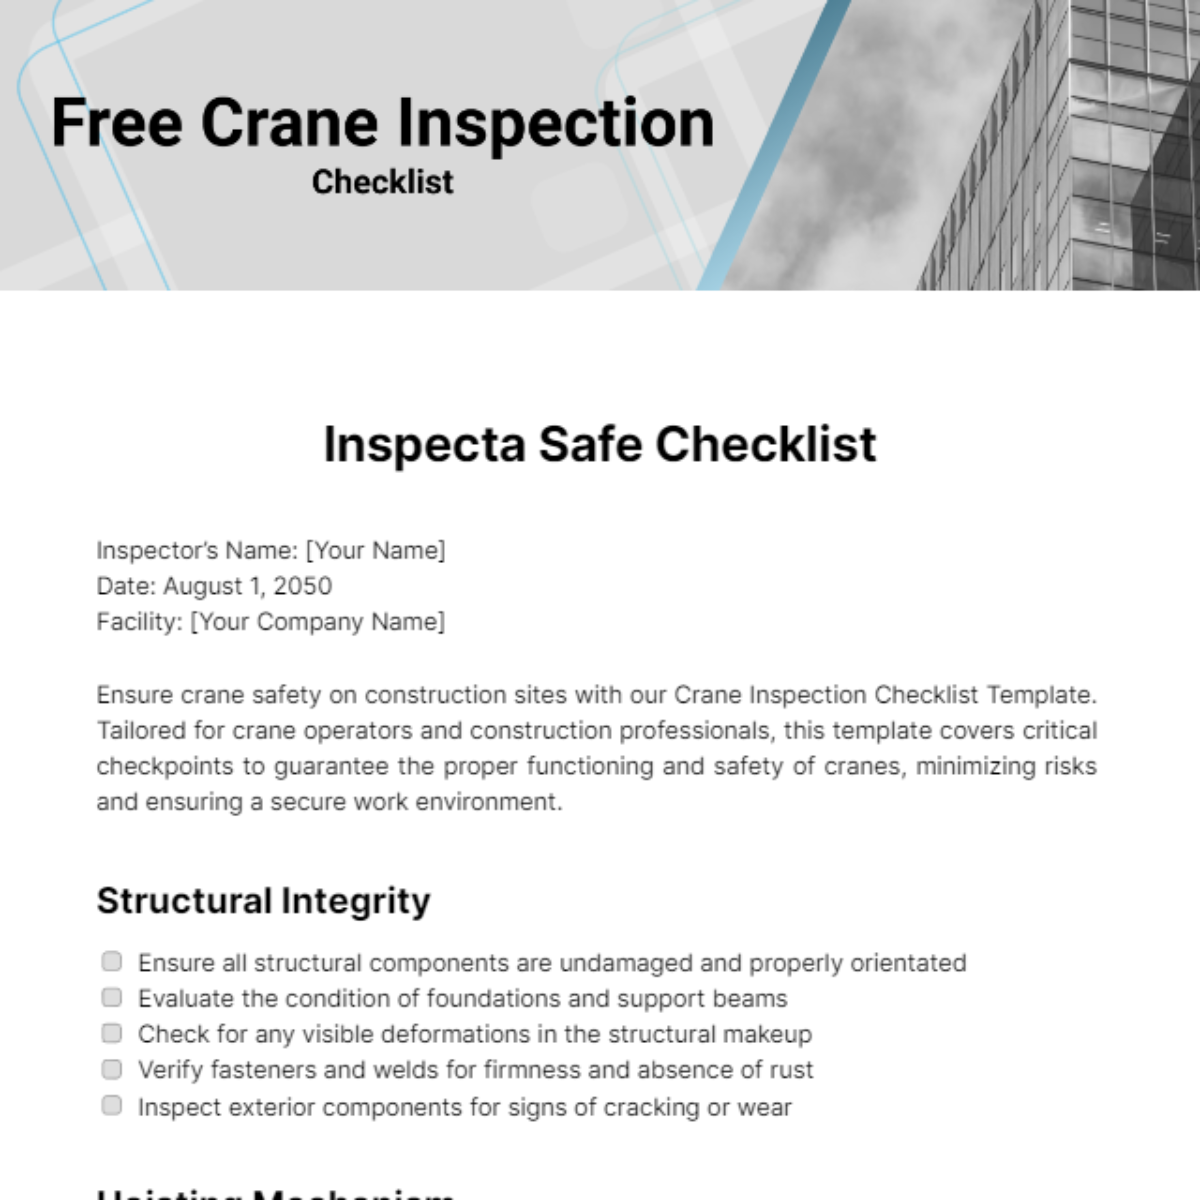 Free Crane Inspection Checklist Template